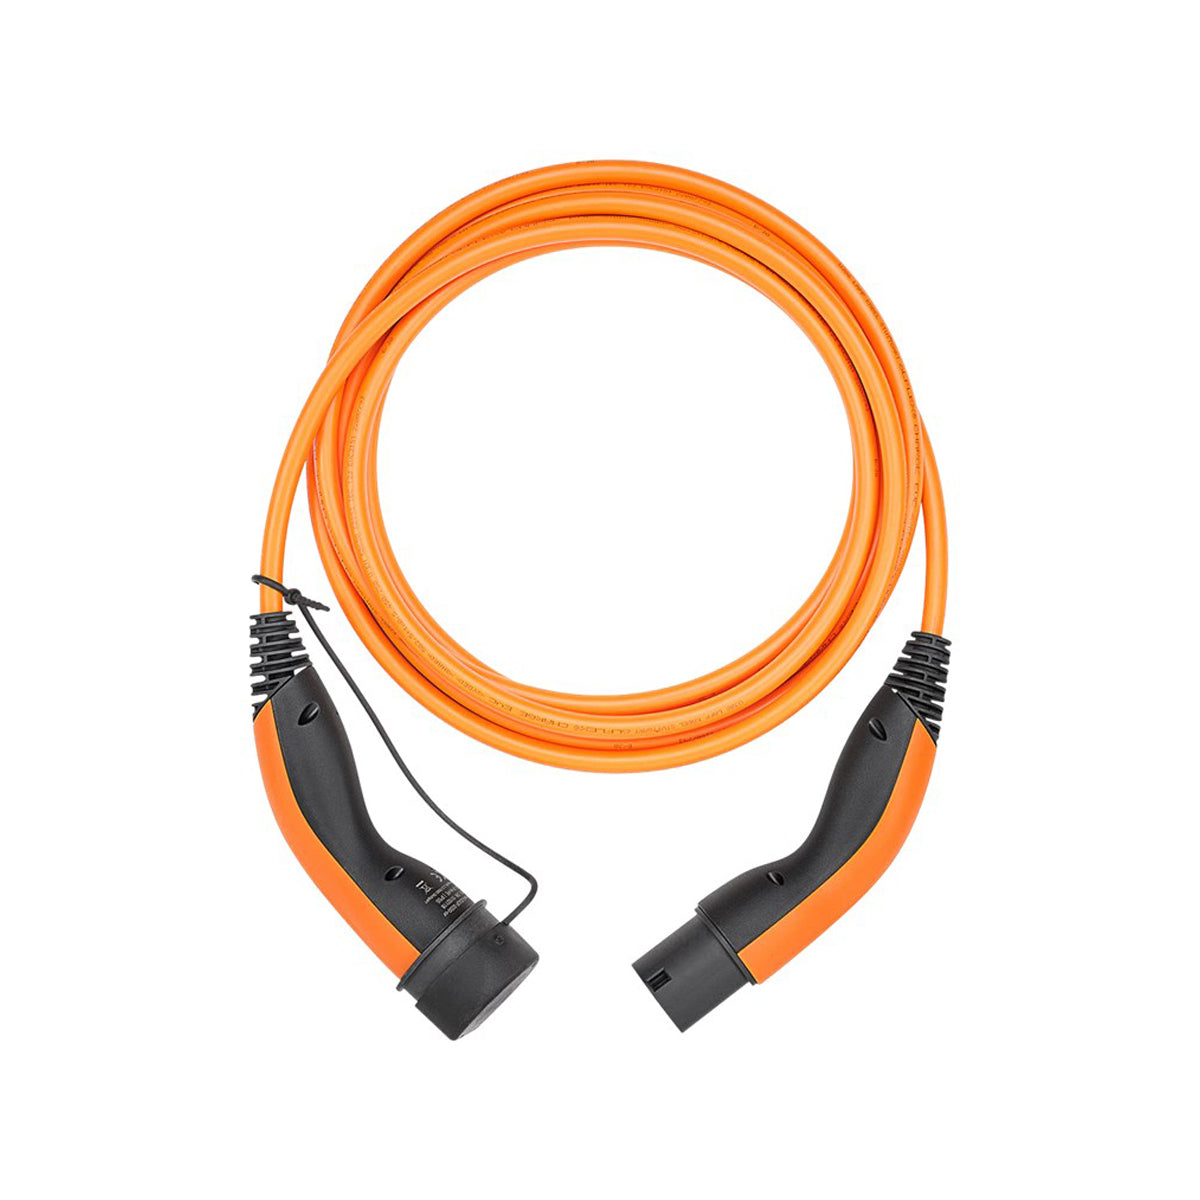 LAPP EV Charge Cable Type 2 (22kW-3P-32A) 7m - Orange.